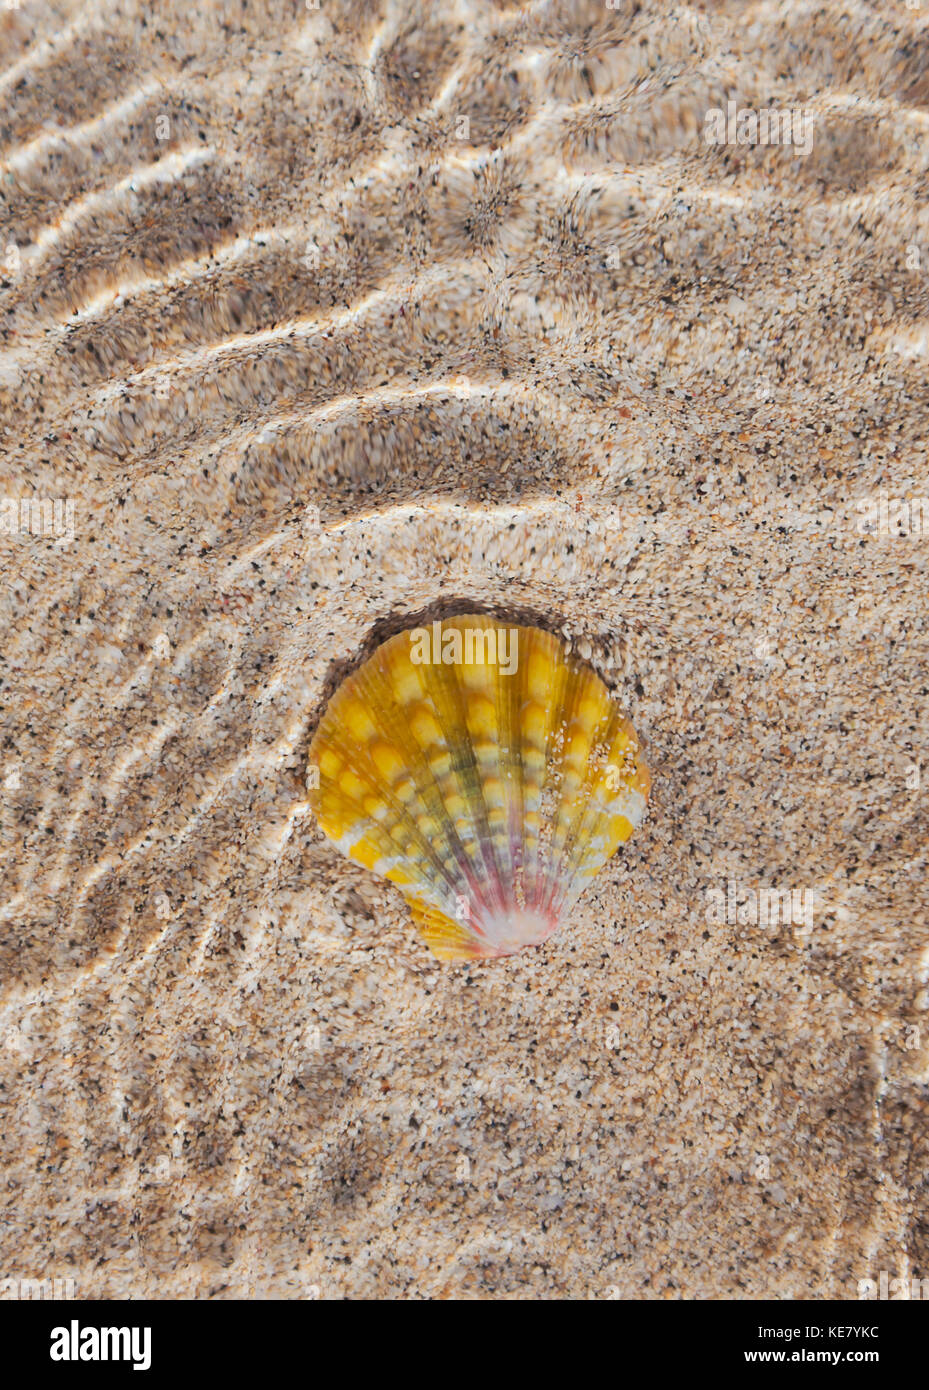 A hawaiian orange sunrise shell (pecten scallop) found in a sandy tide pool at the beach, North Shore; Oahu, Hawaii, United States of America Stock Photo